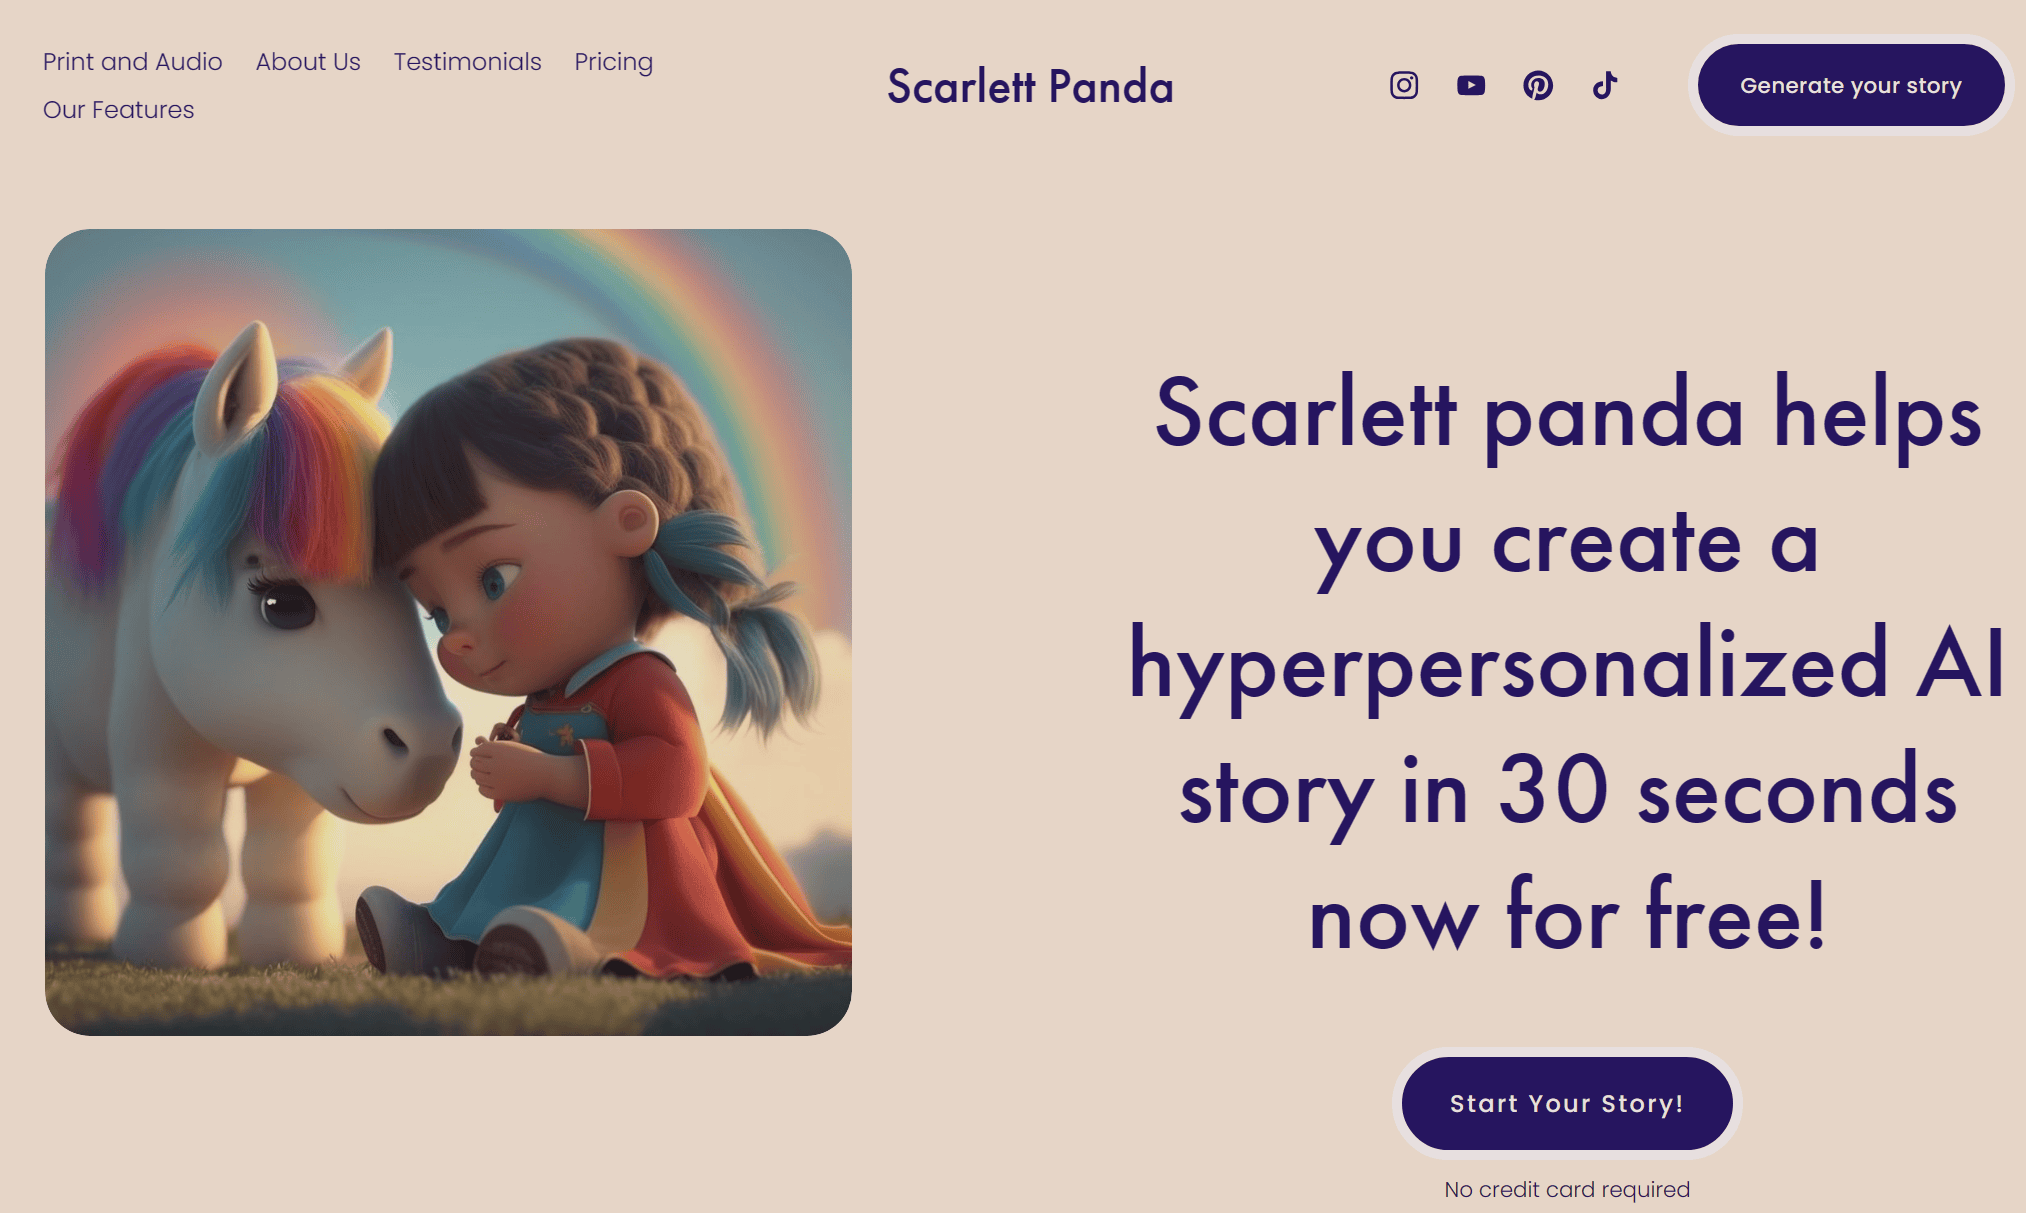 Scarlett Panda